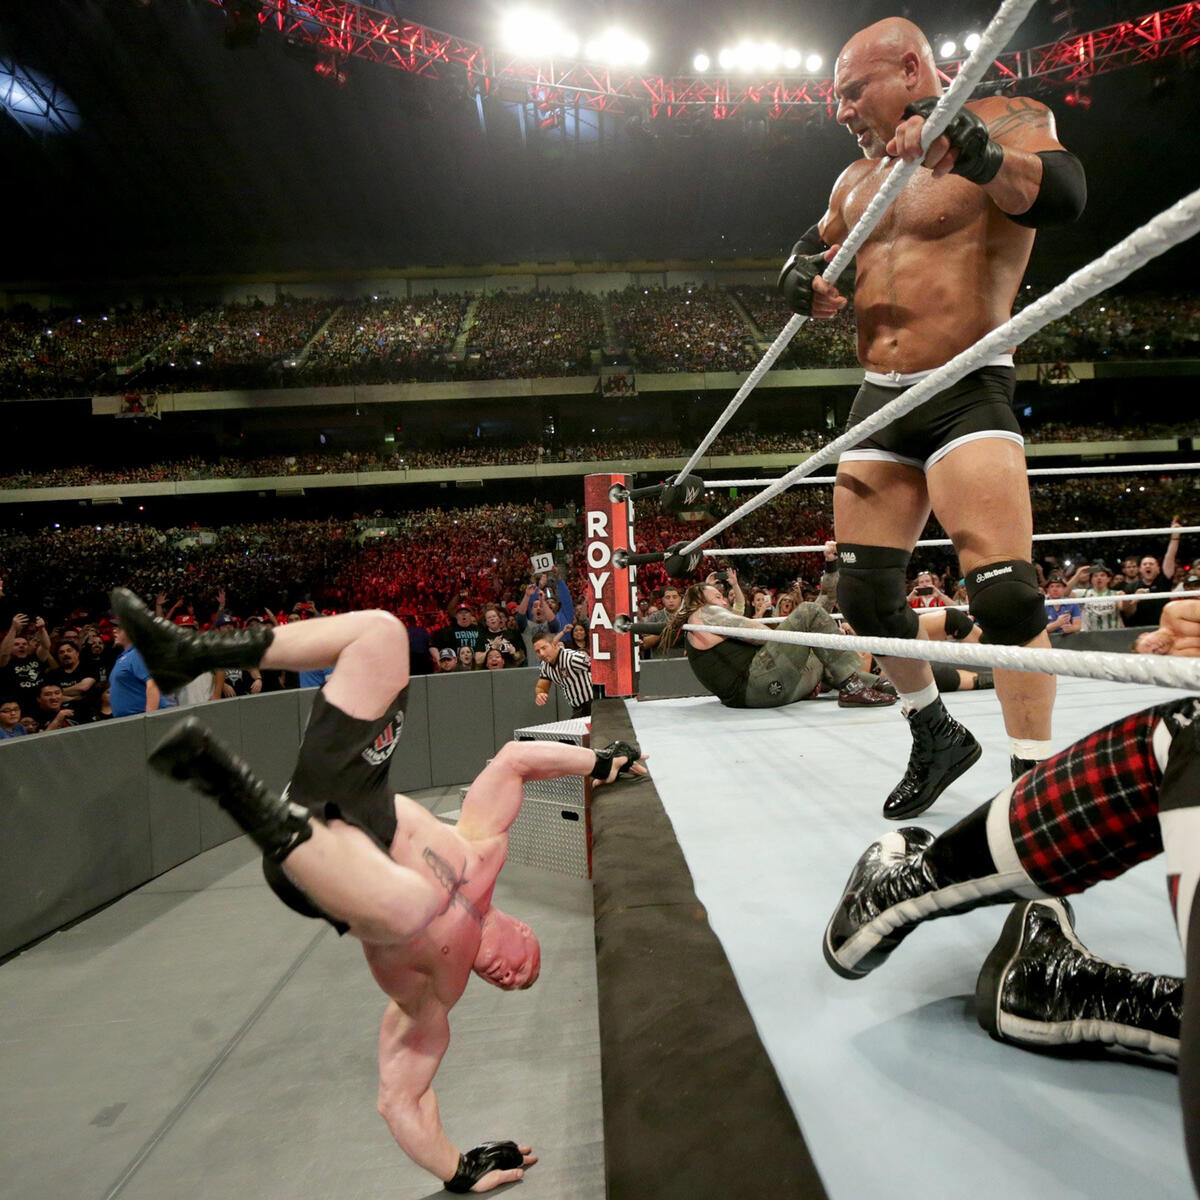 Immediately after the Spear, Goldberg shockingly eliminates The Beast Incarnate.